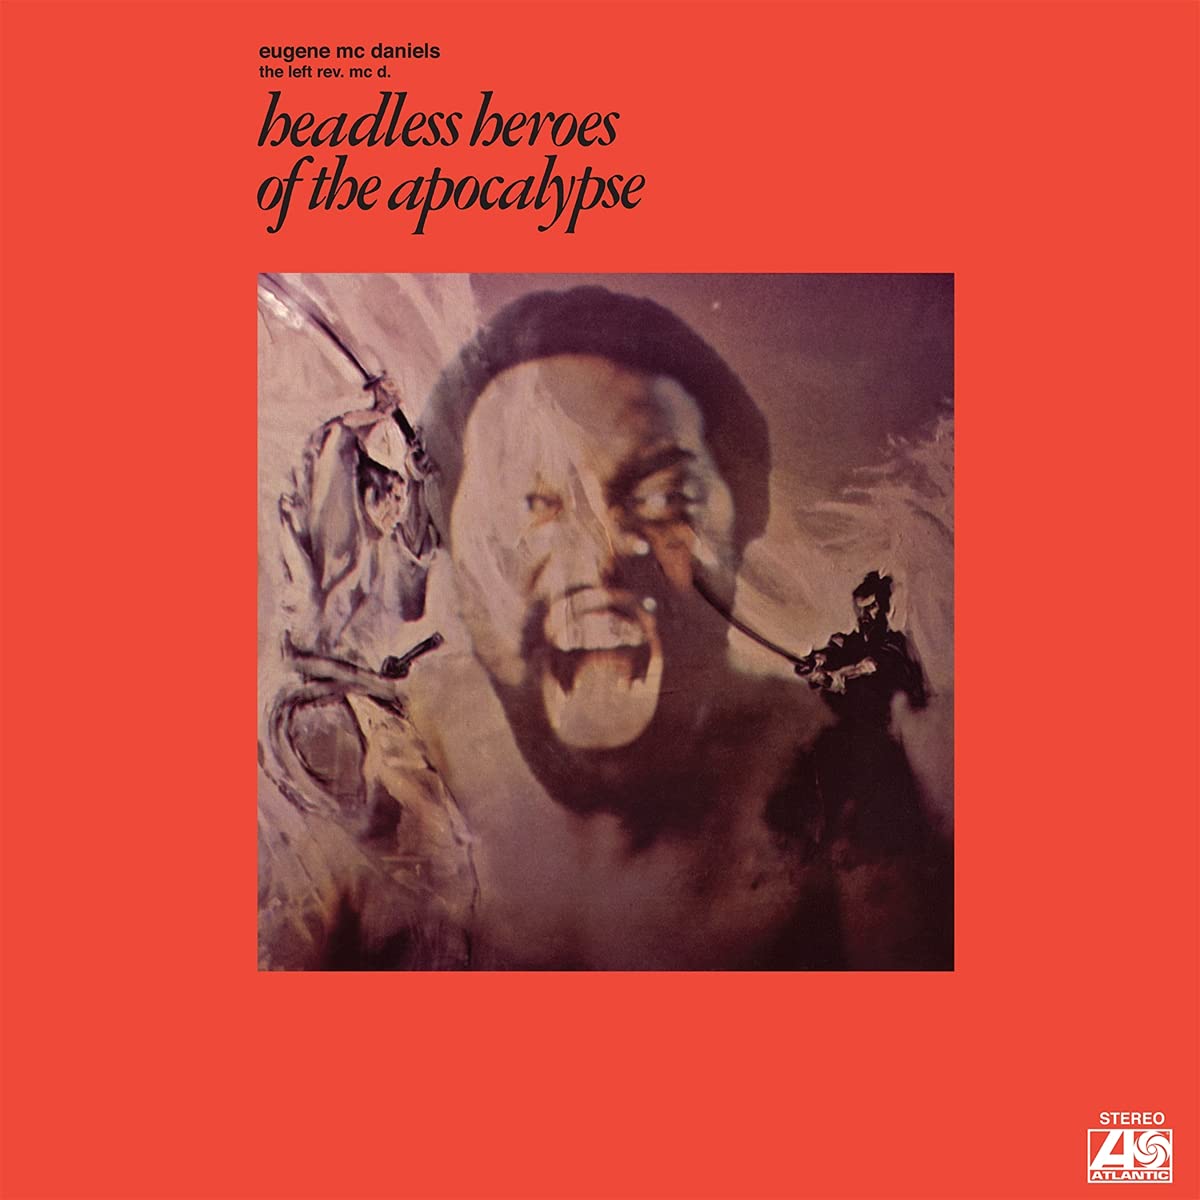 Eugene McDaniels - Headless Heroes Of The Apocalypse LP (Music On Vinyl, 180g, Audiophile, EU Pressing)